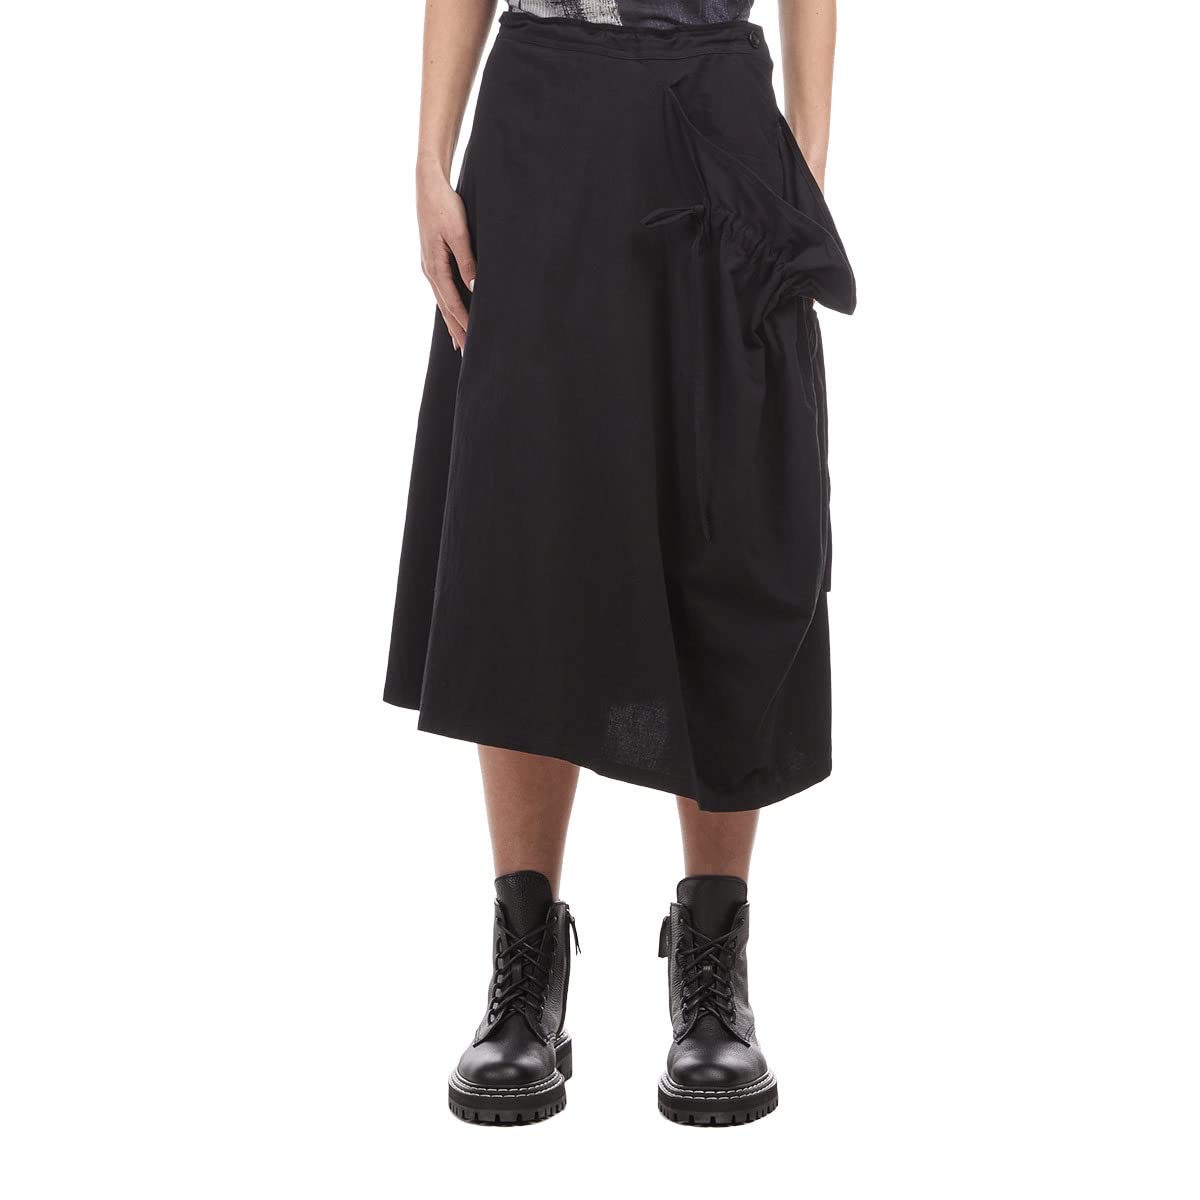 Maximal Comfort, Maximal Style: Shop Parachute Pants and Skirts Edit ...